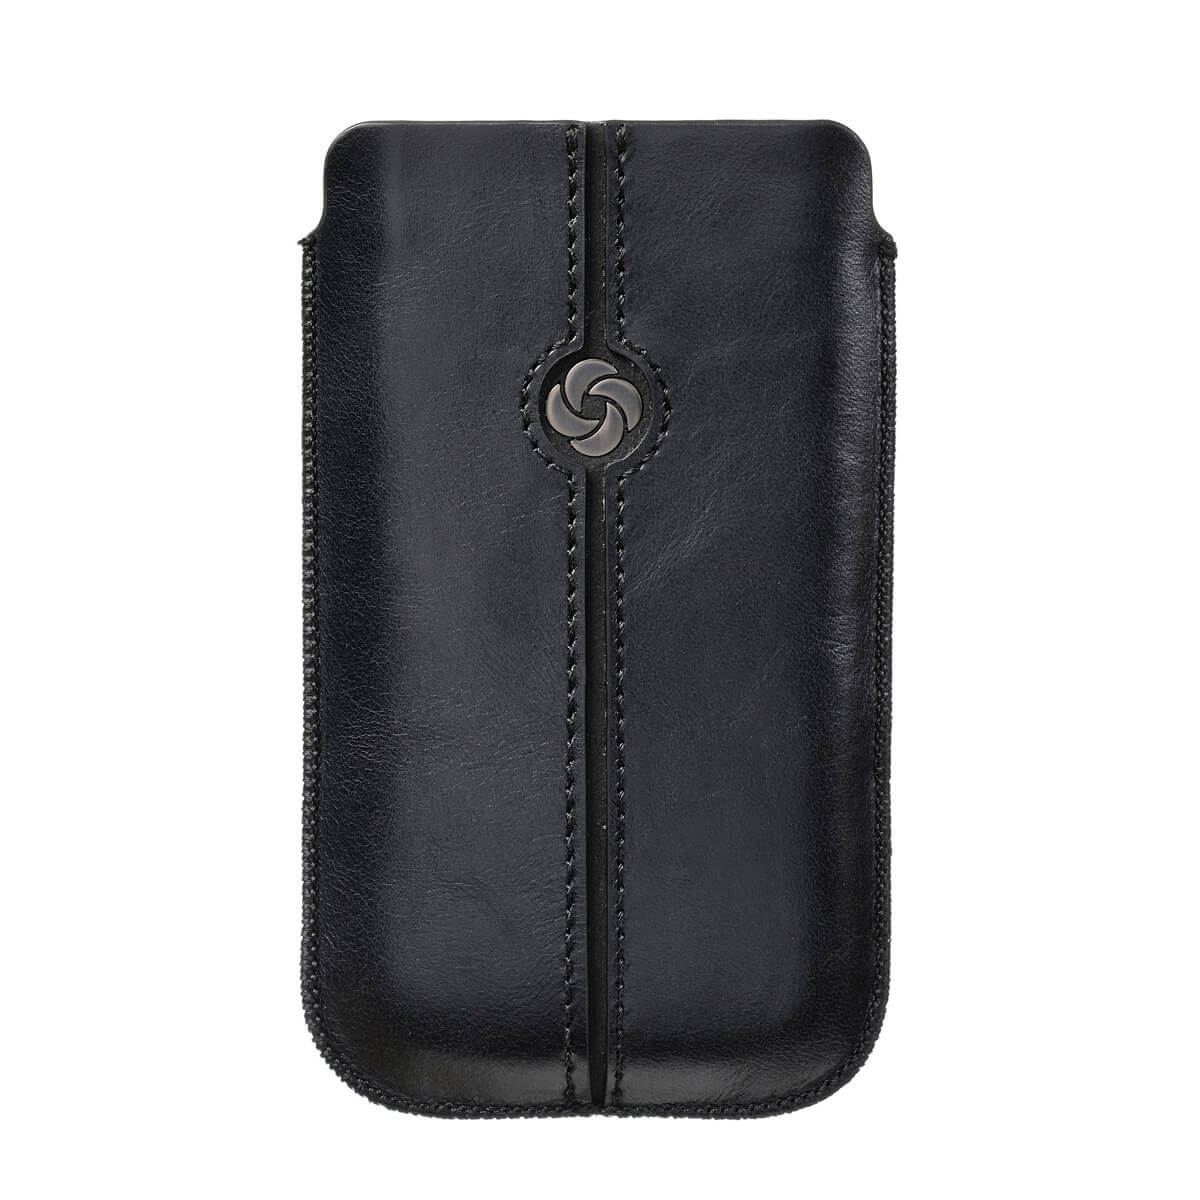 SAMSONITE Mobile Bag Dezir Leather Small Black